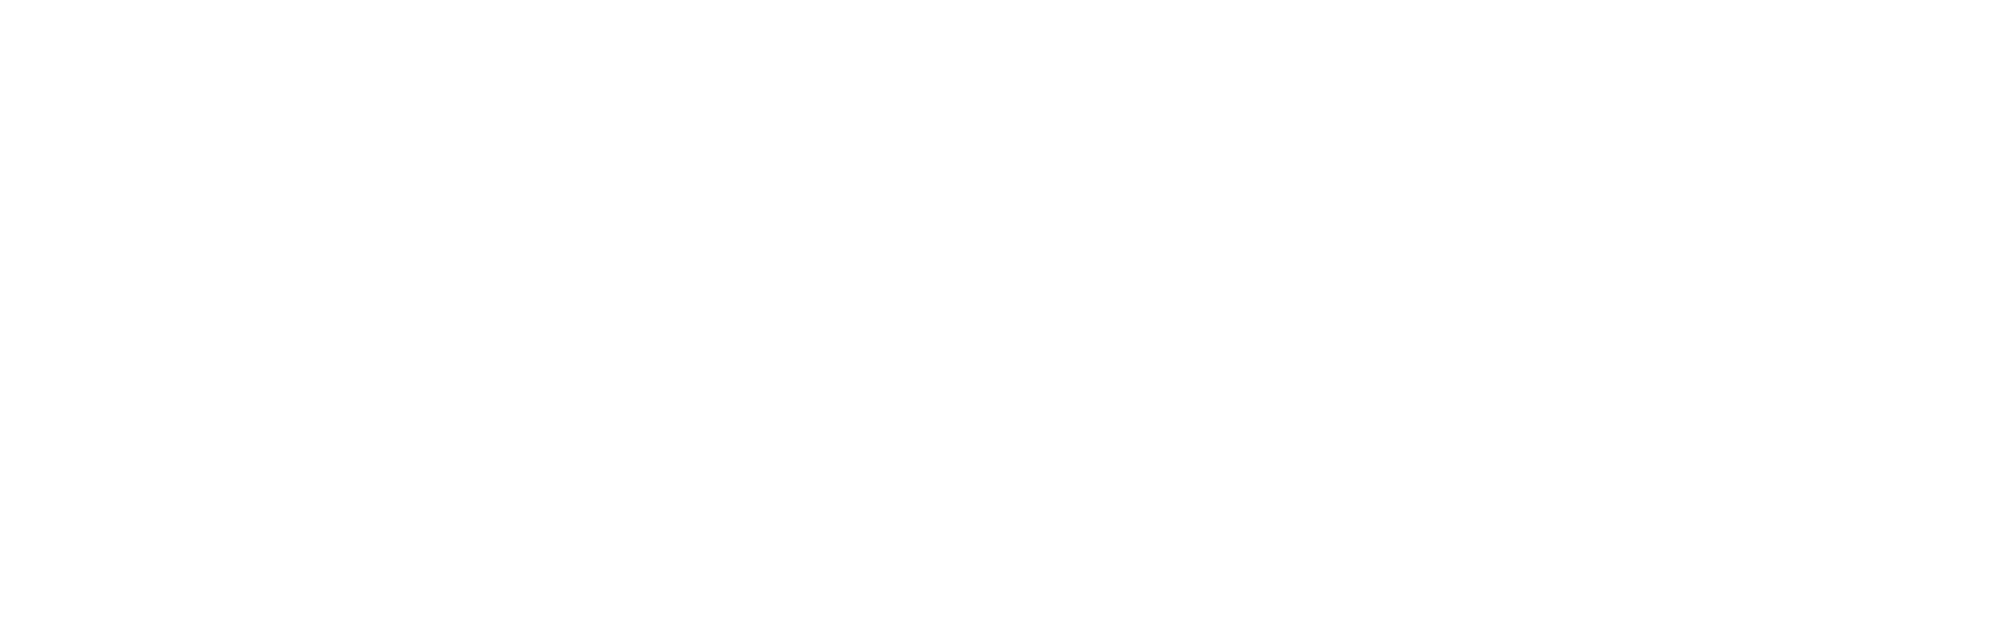 Blog - Leather harmonica - Premium handmade leather goods